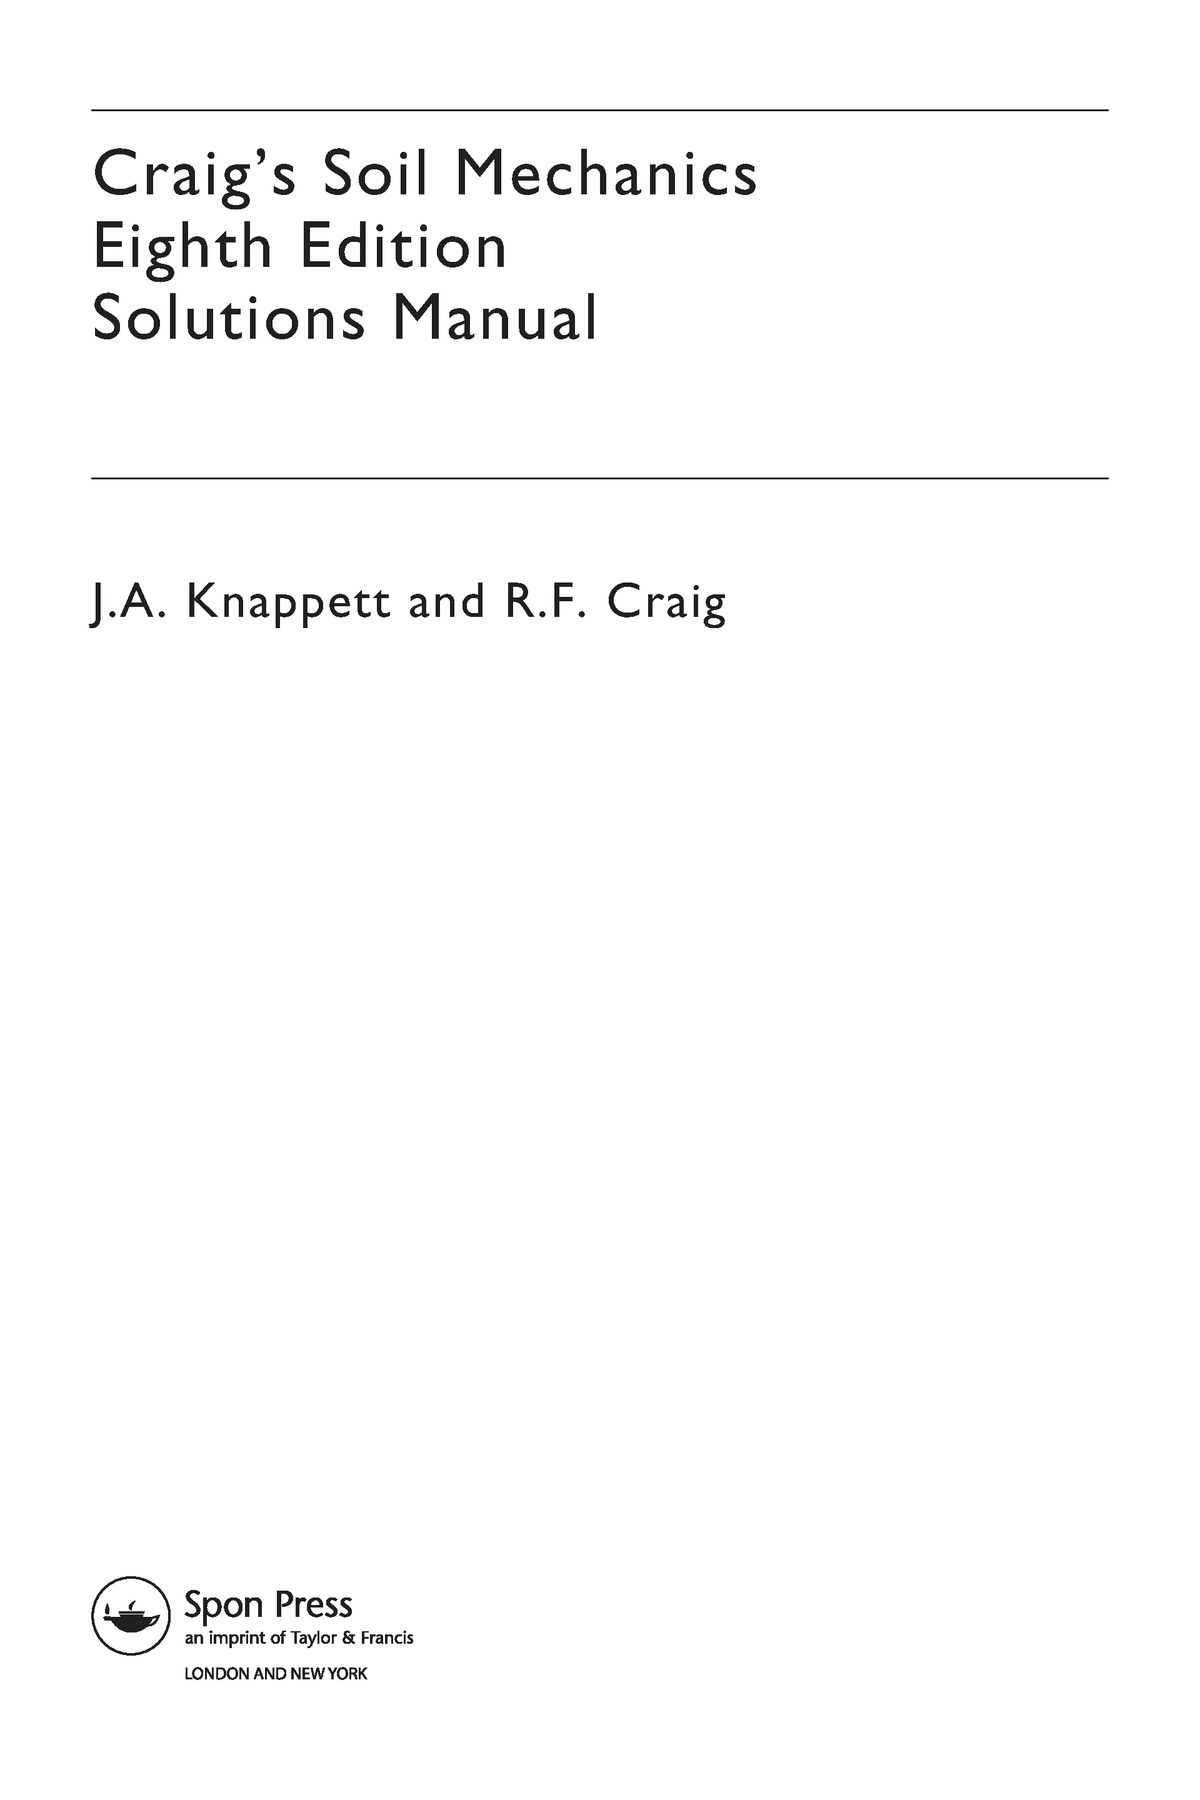 Craigs soil mechanics eighth edition solutions manual StuDocu